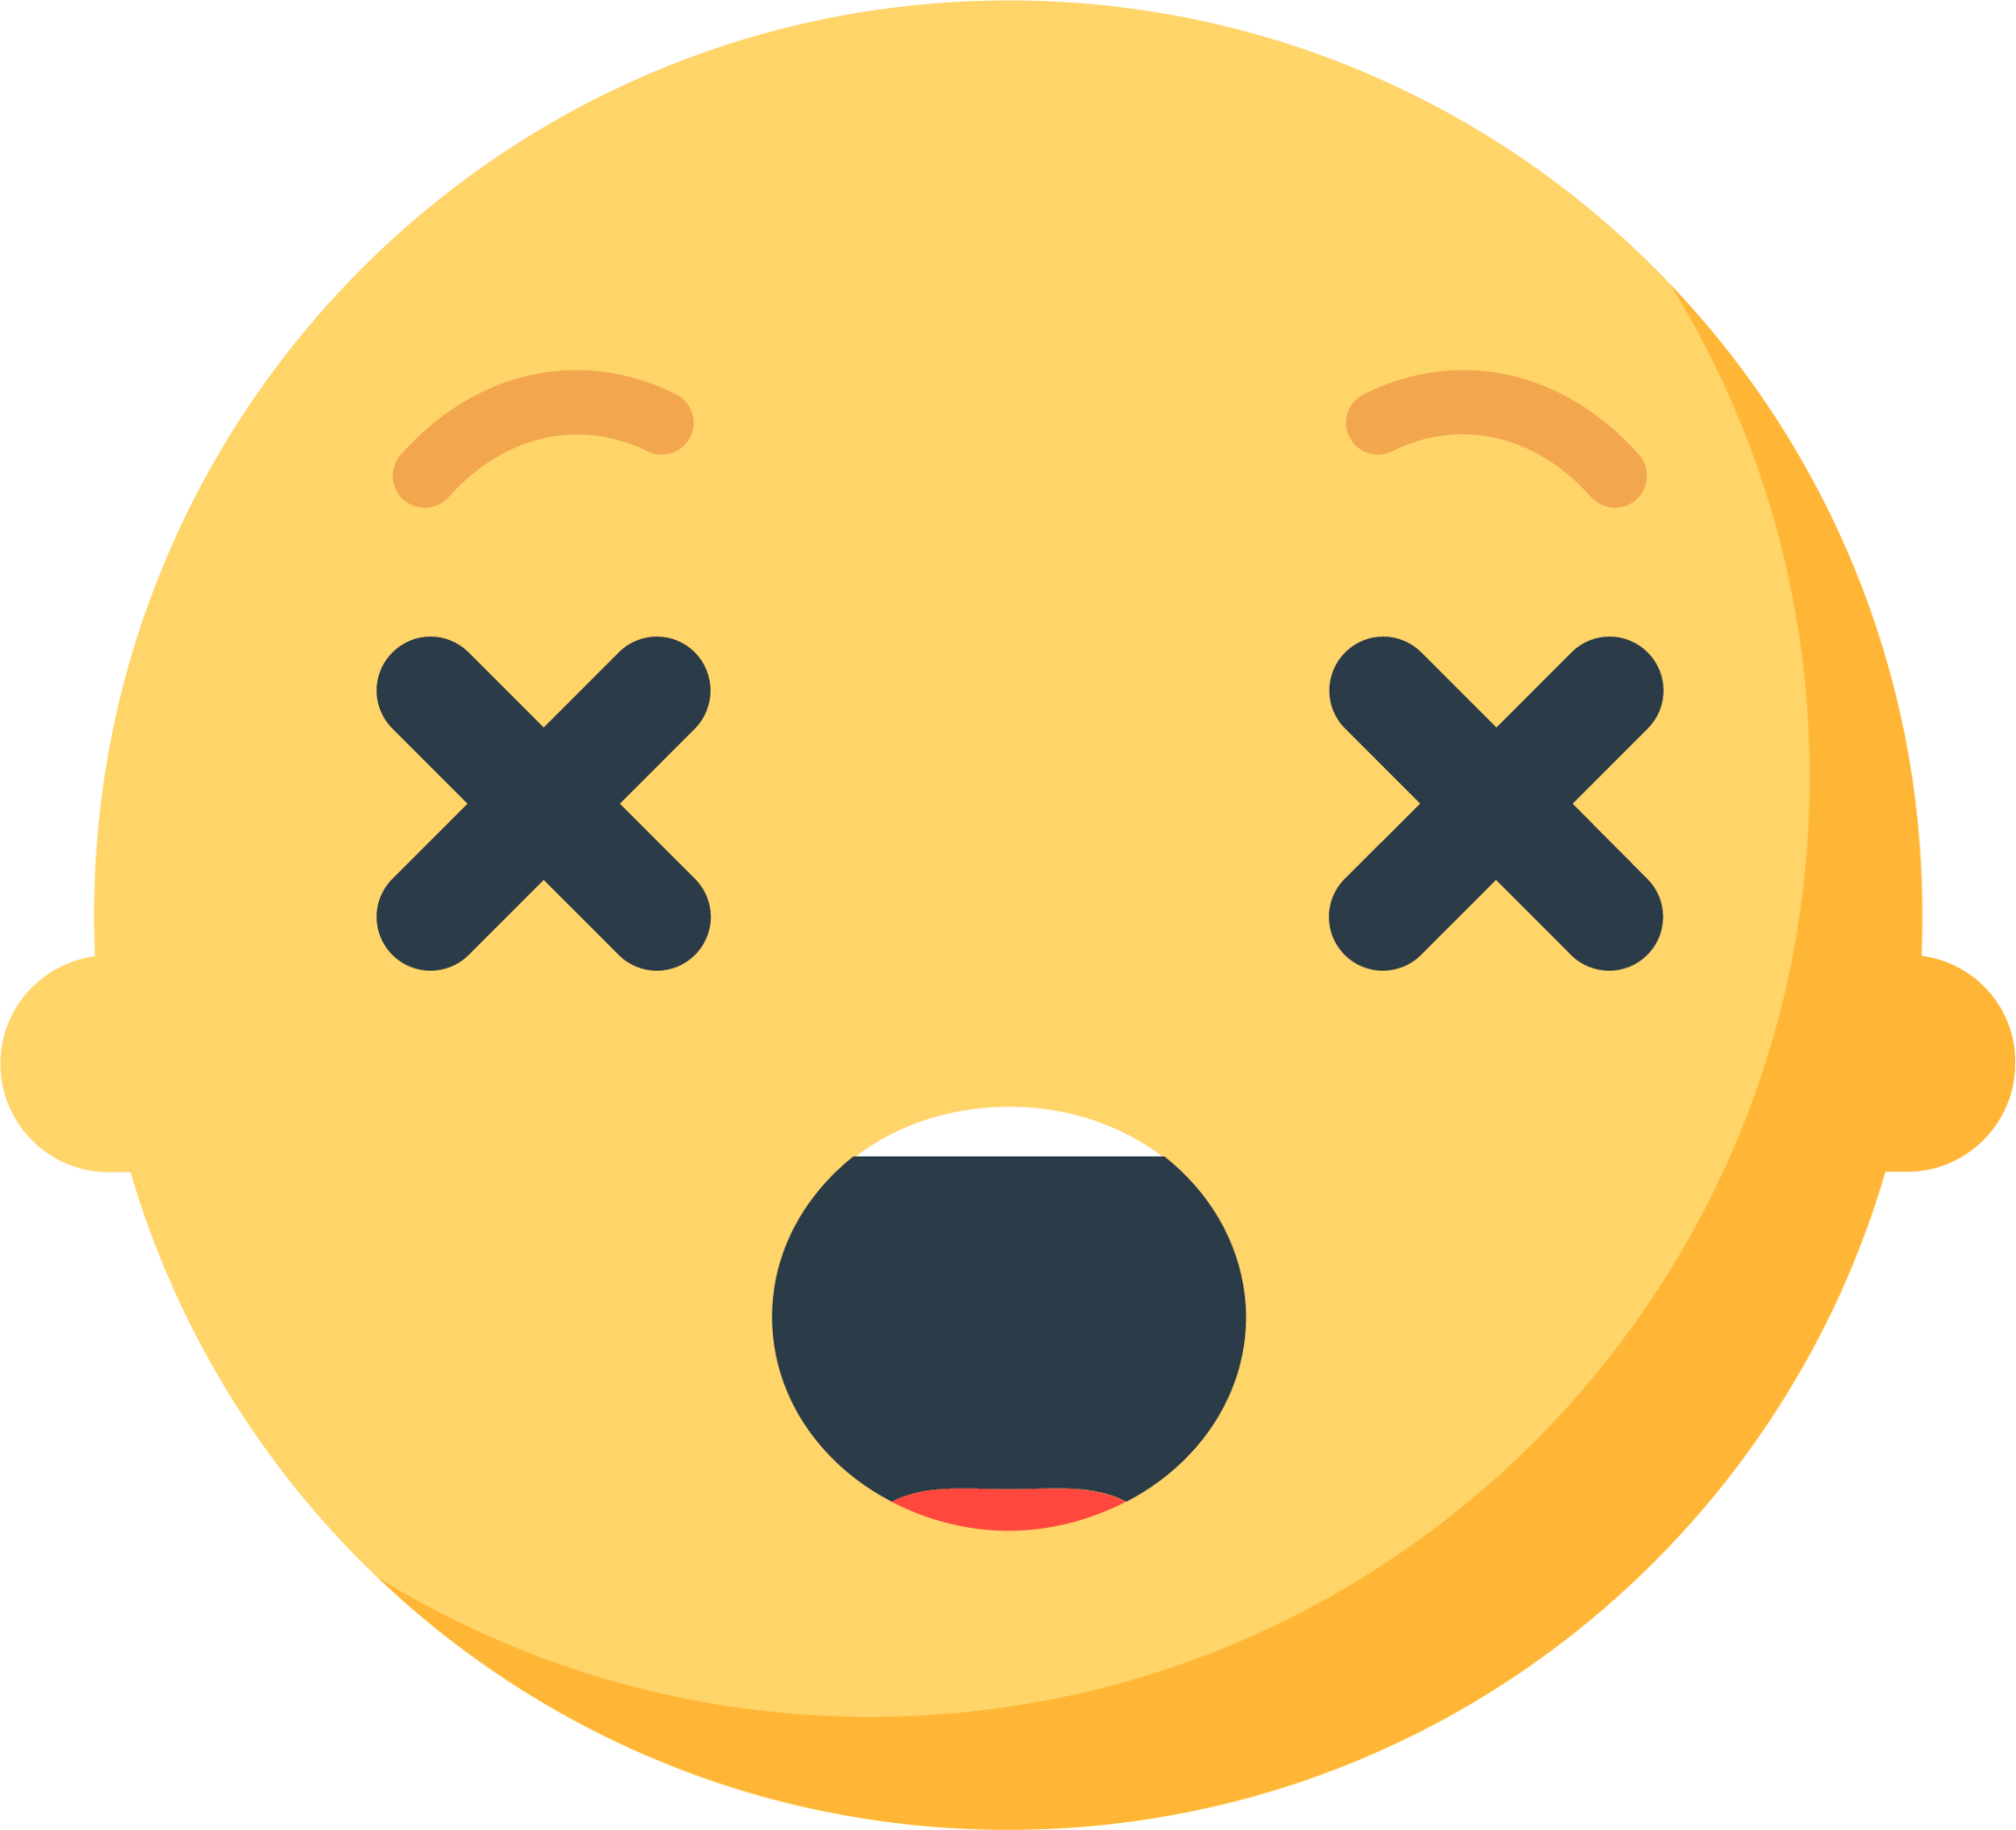 googly) eyes Emoji - Download for free – Iconduck